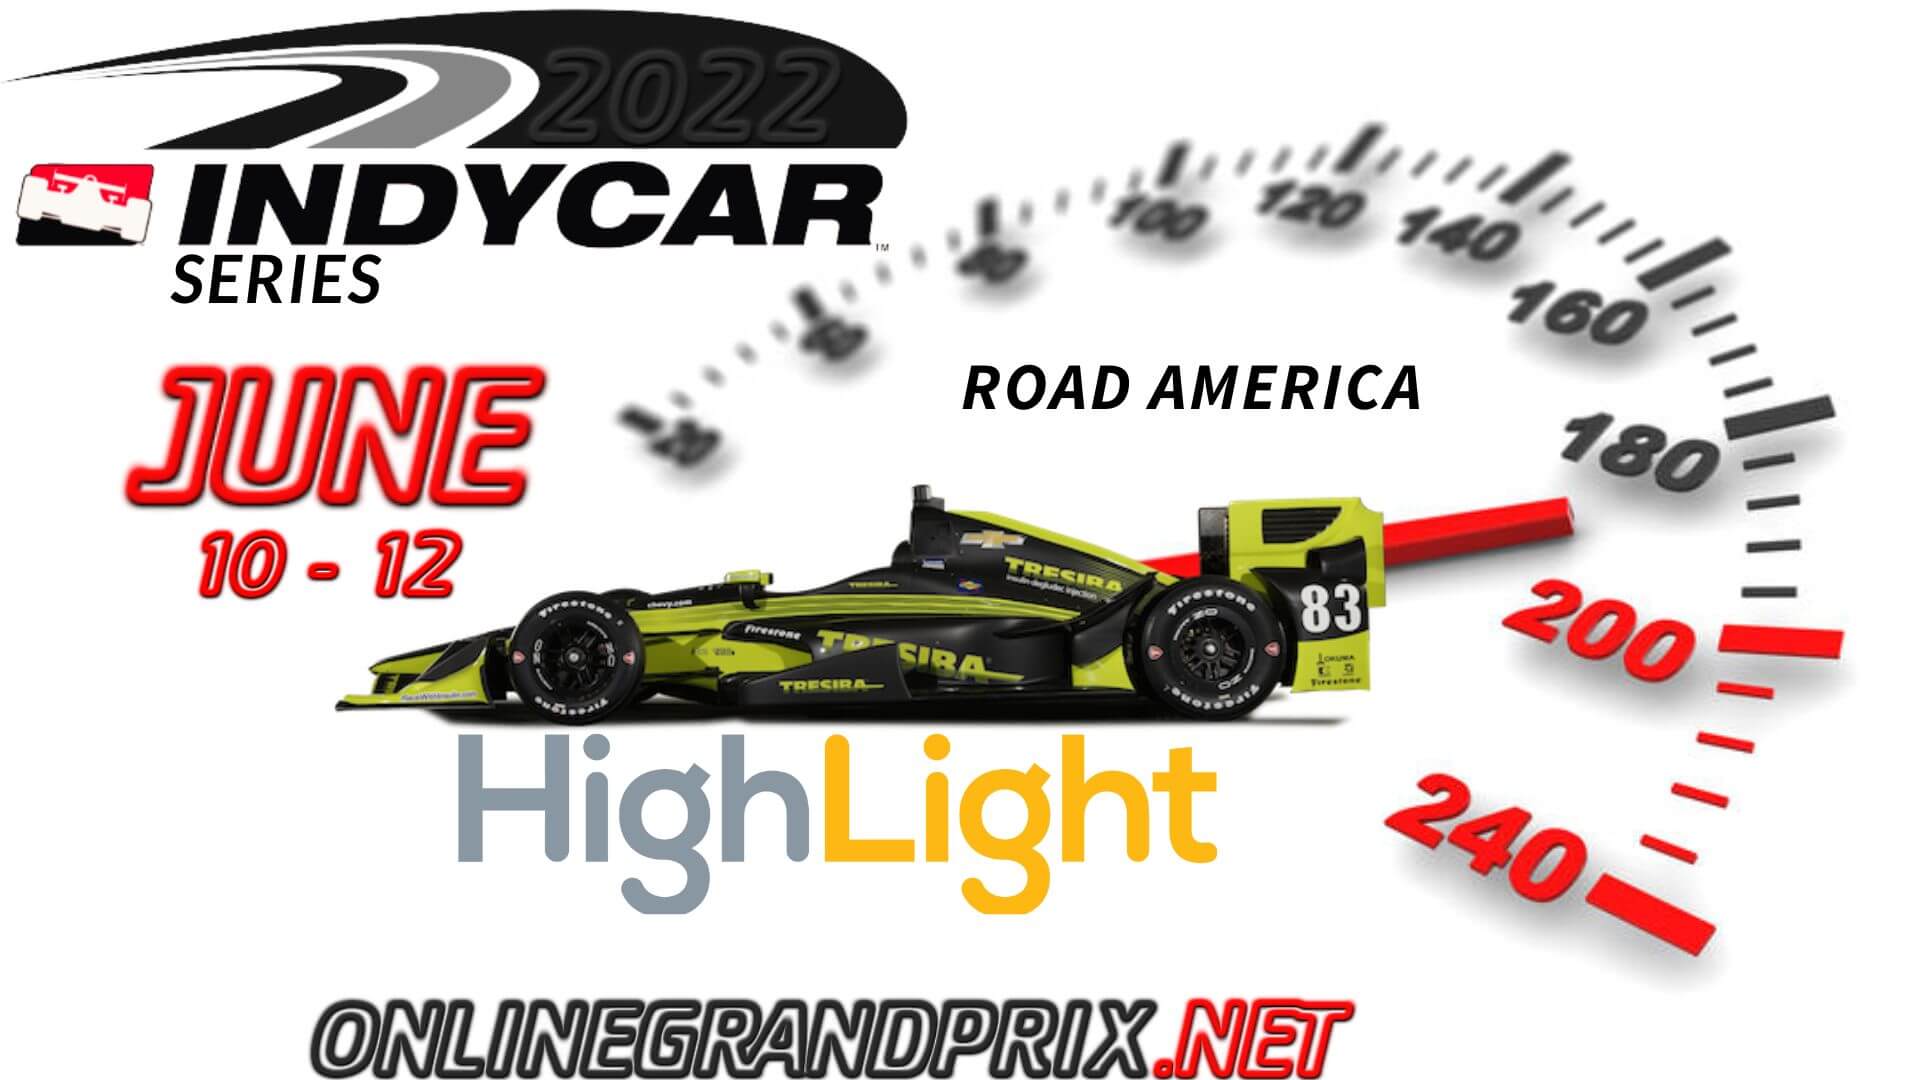 Sonsio Grand Prix At Road America Highlights INDYCAR 2022